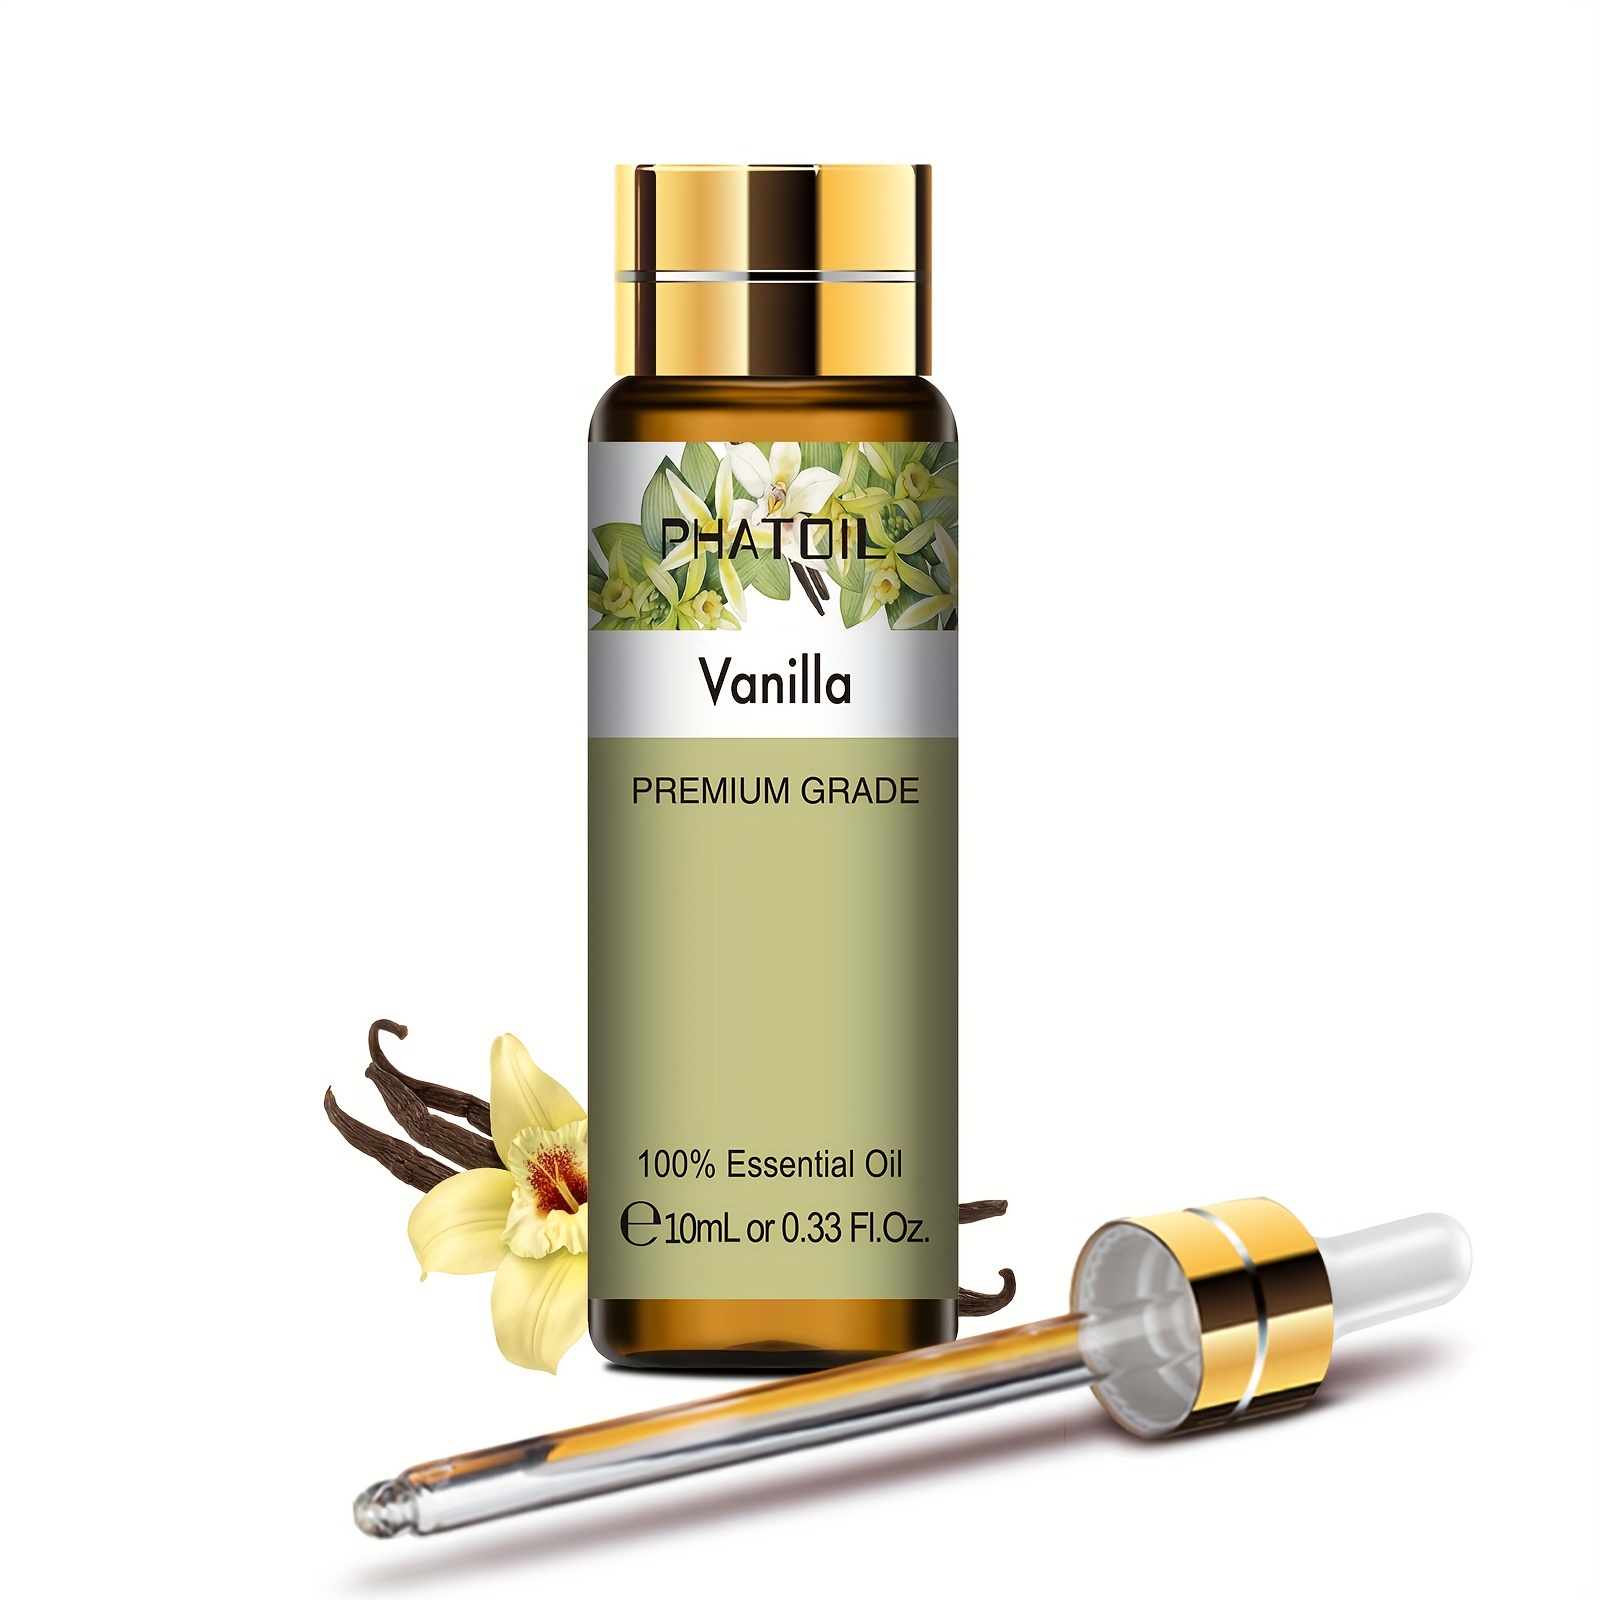 

1pc 10ml/0.33 Fl.oz Vanilla Essential Oils For Diffusers, Humidifiers, Soap Making